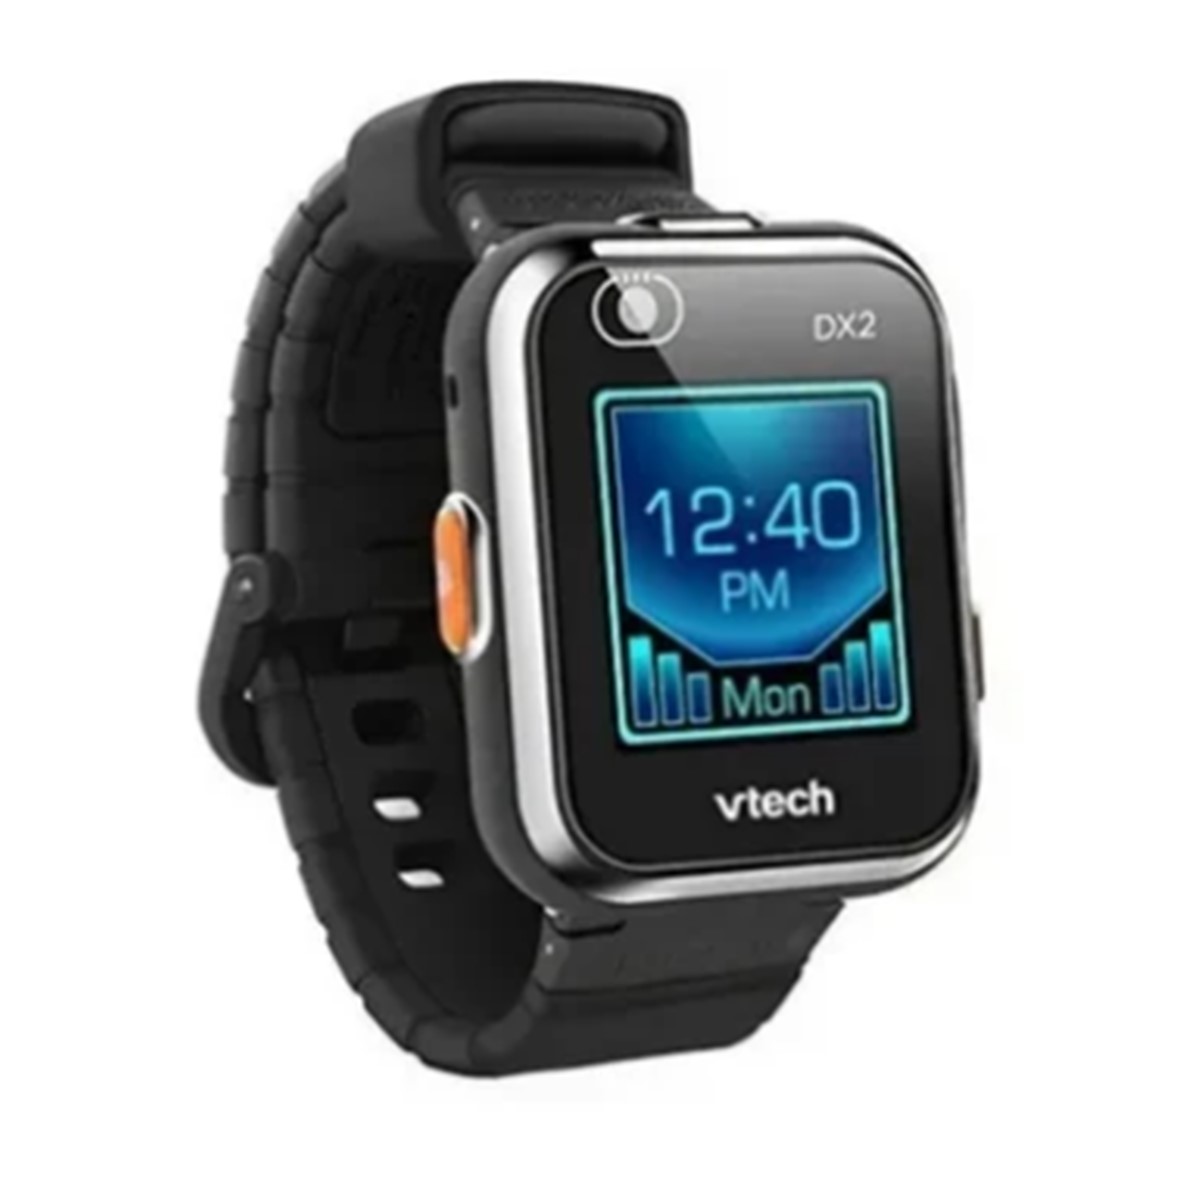 VTech - Kidizoom Smartwatch MAX negro, Reloj inteligente para